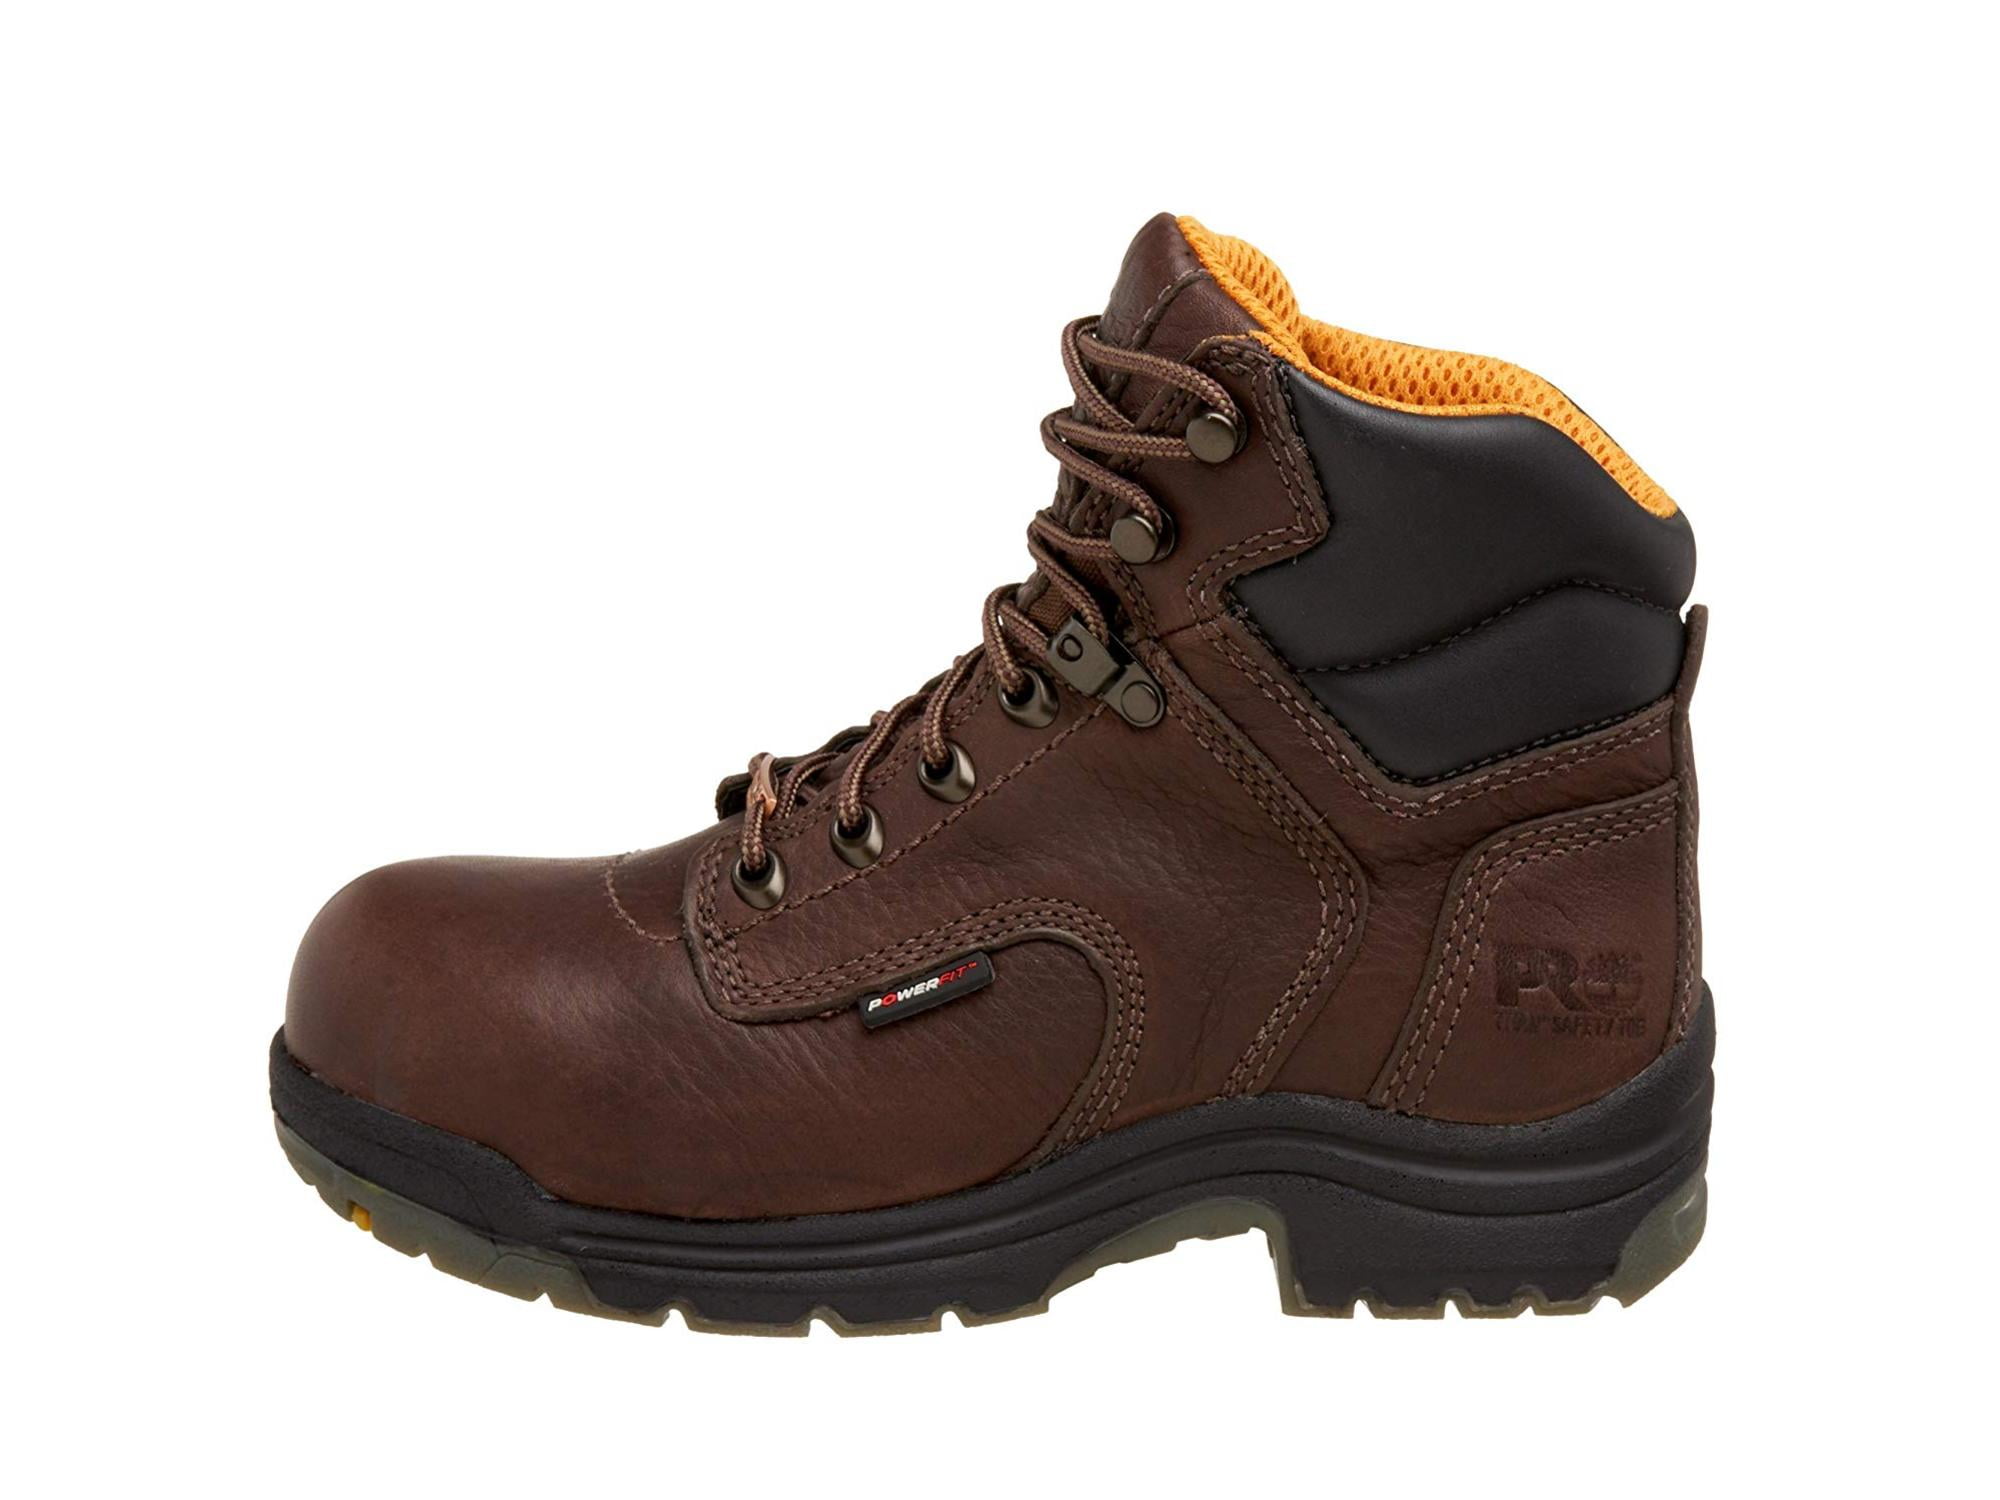 timberland pro series waterproof boots